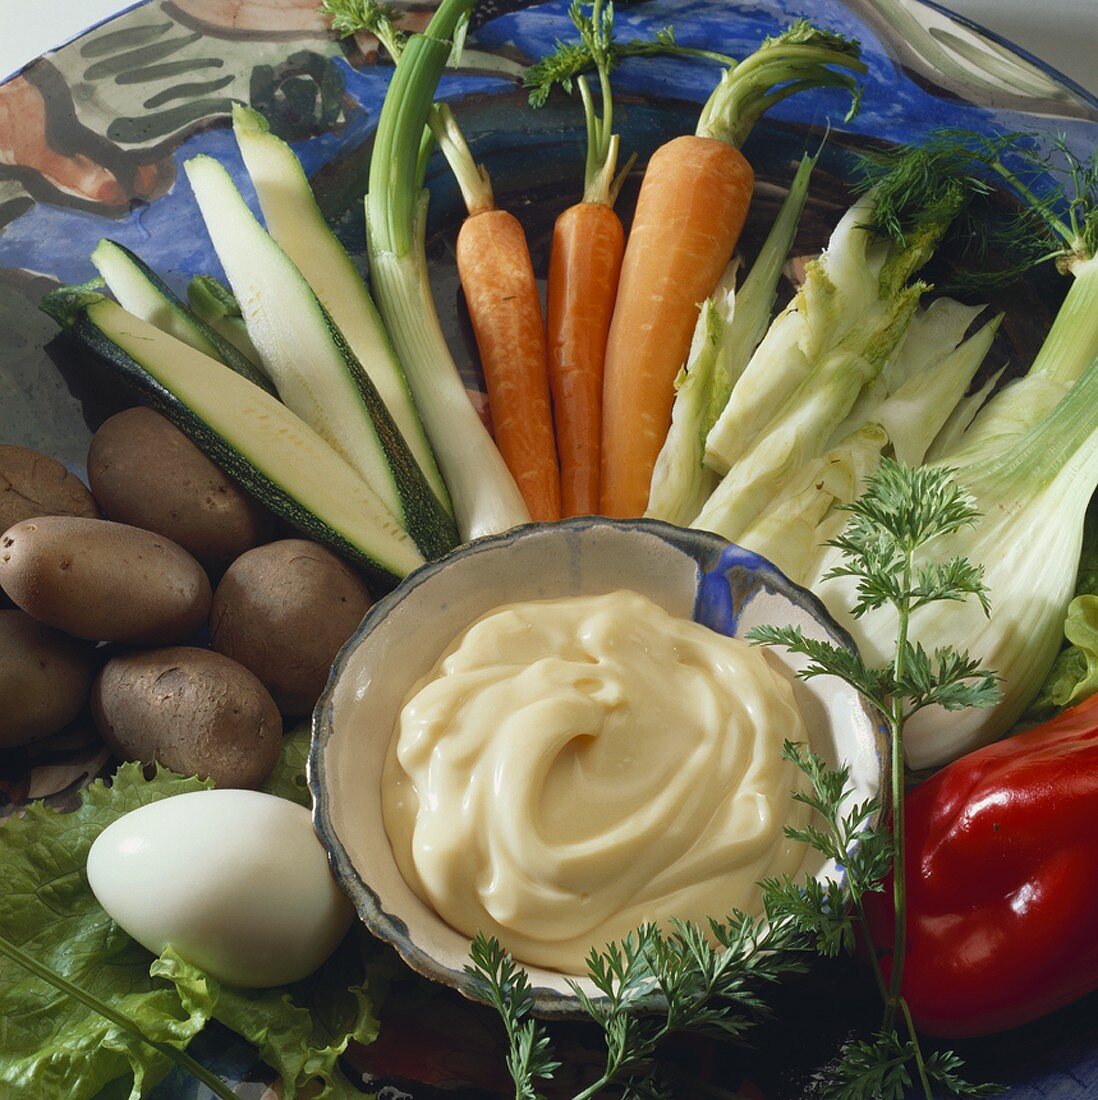 Vegetable platter with aioli (garlic dip)